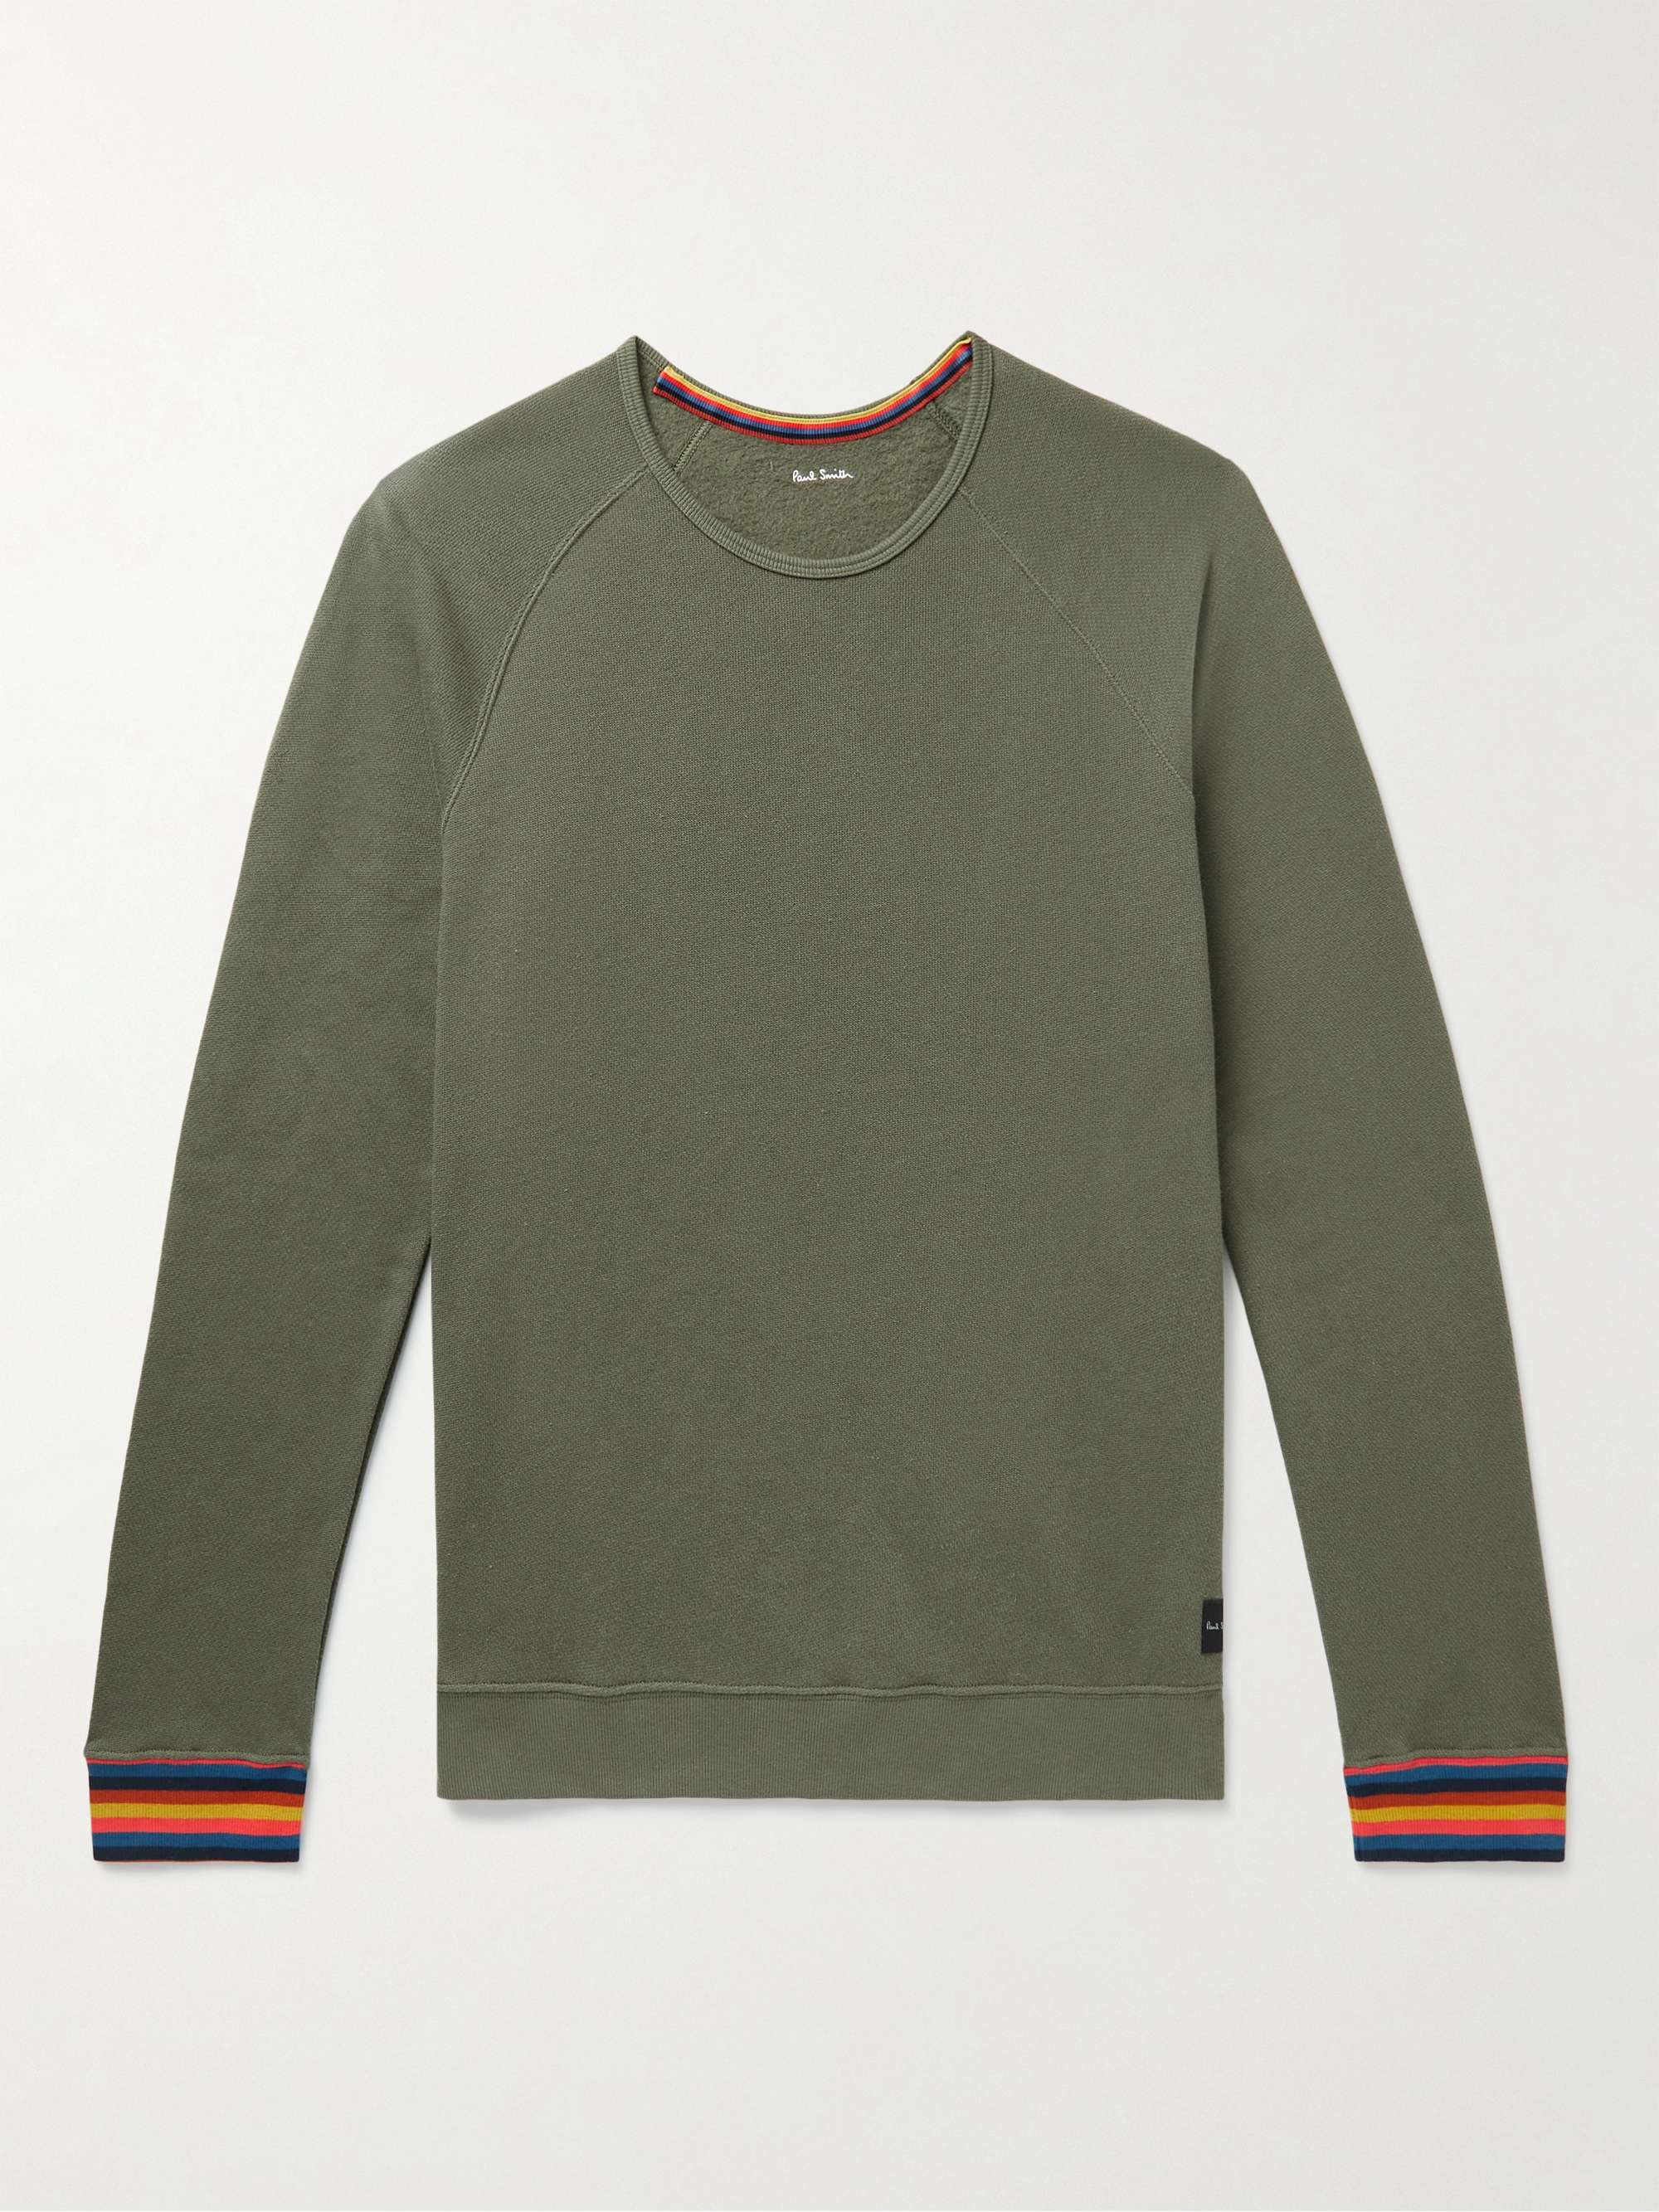 Army green Striped Cotton-Jersey Sweatshirt | PAUL SMITH | MR PORTER